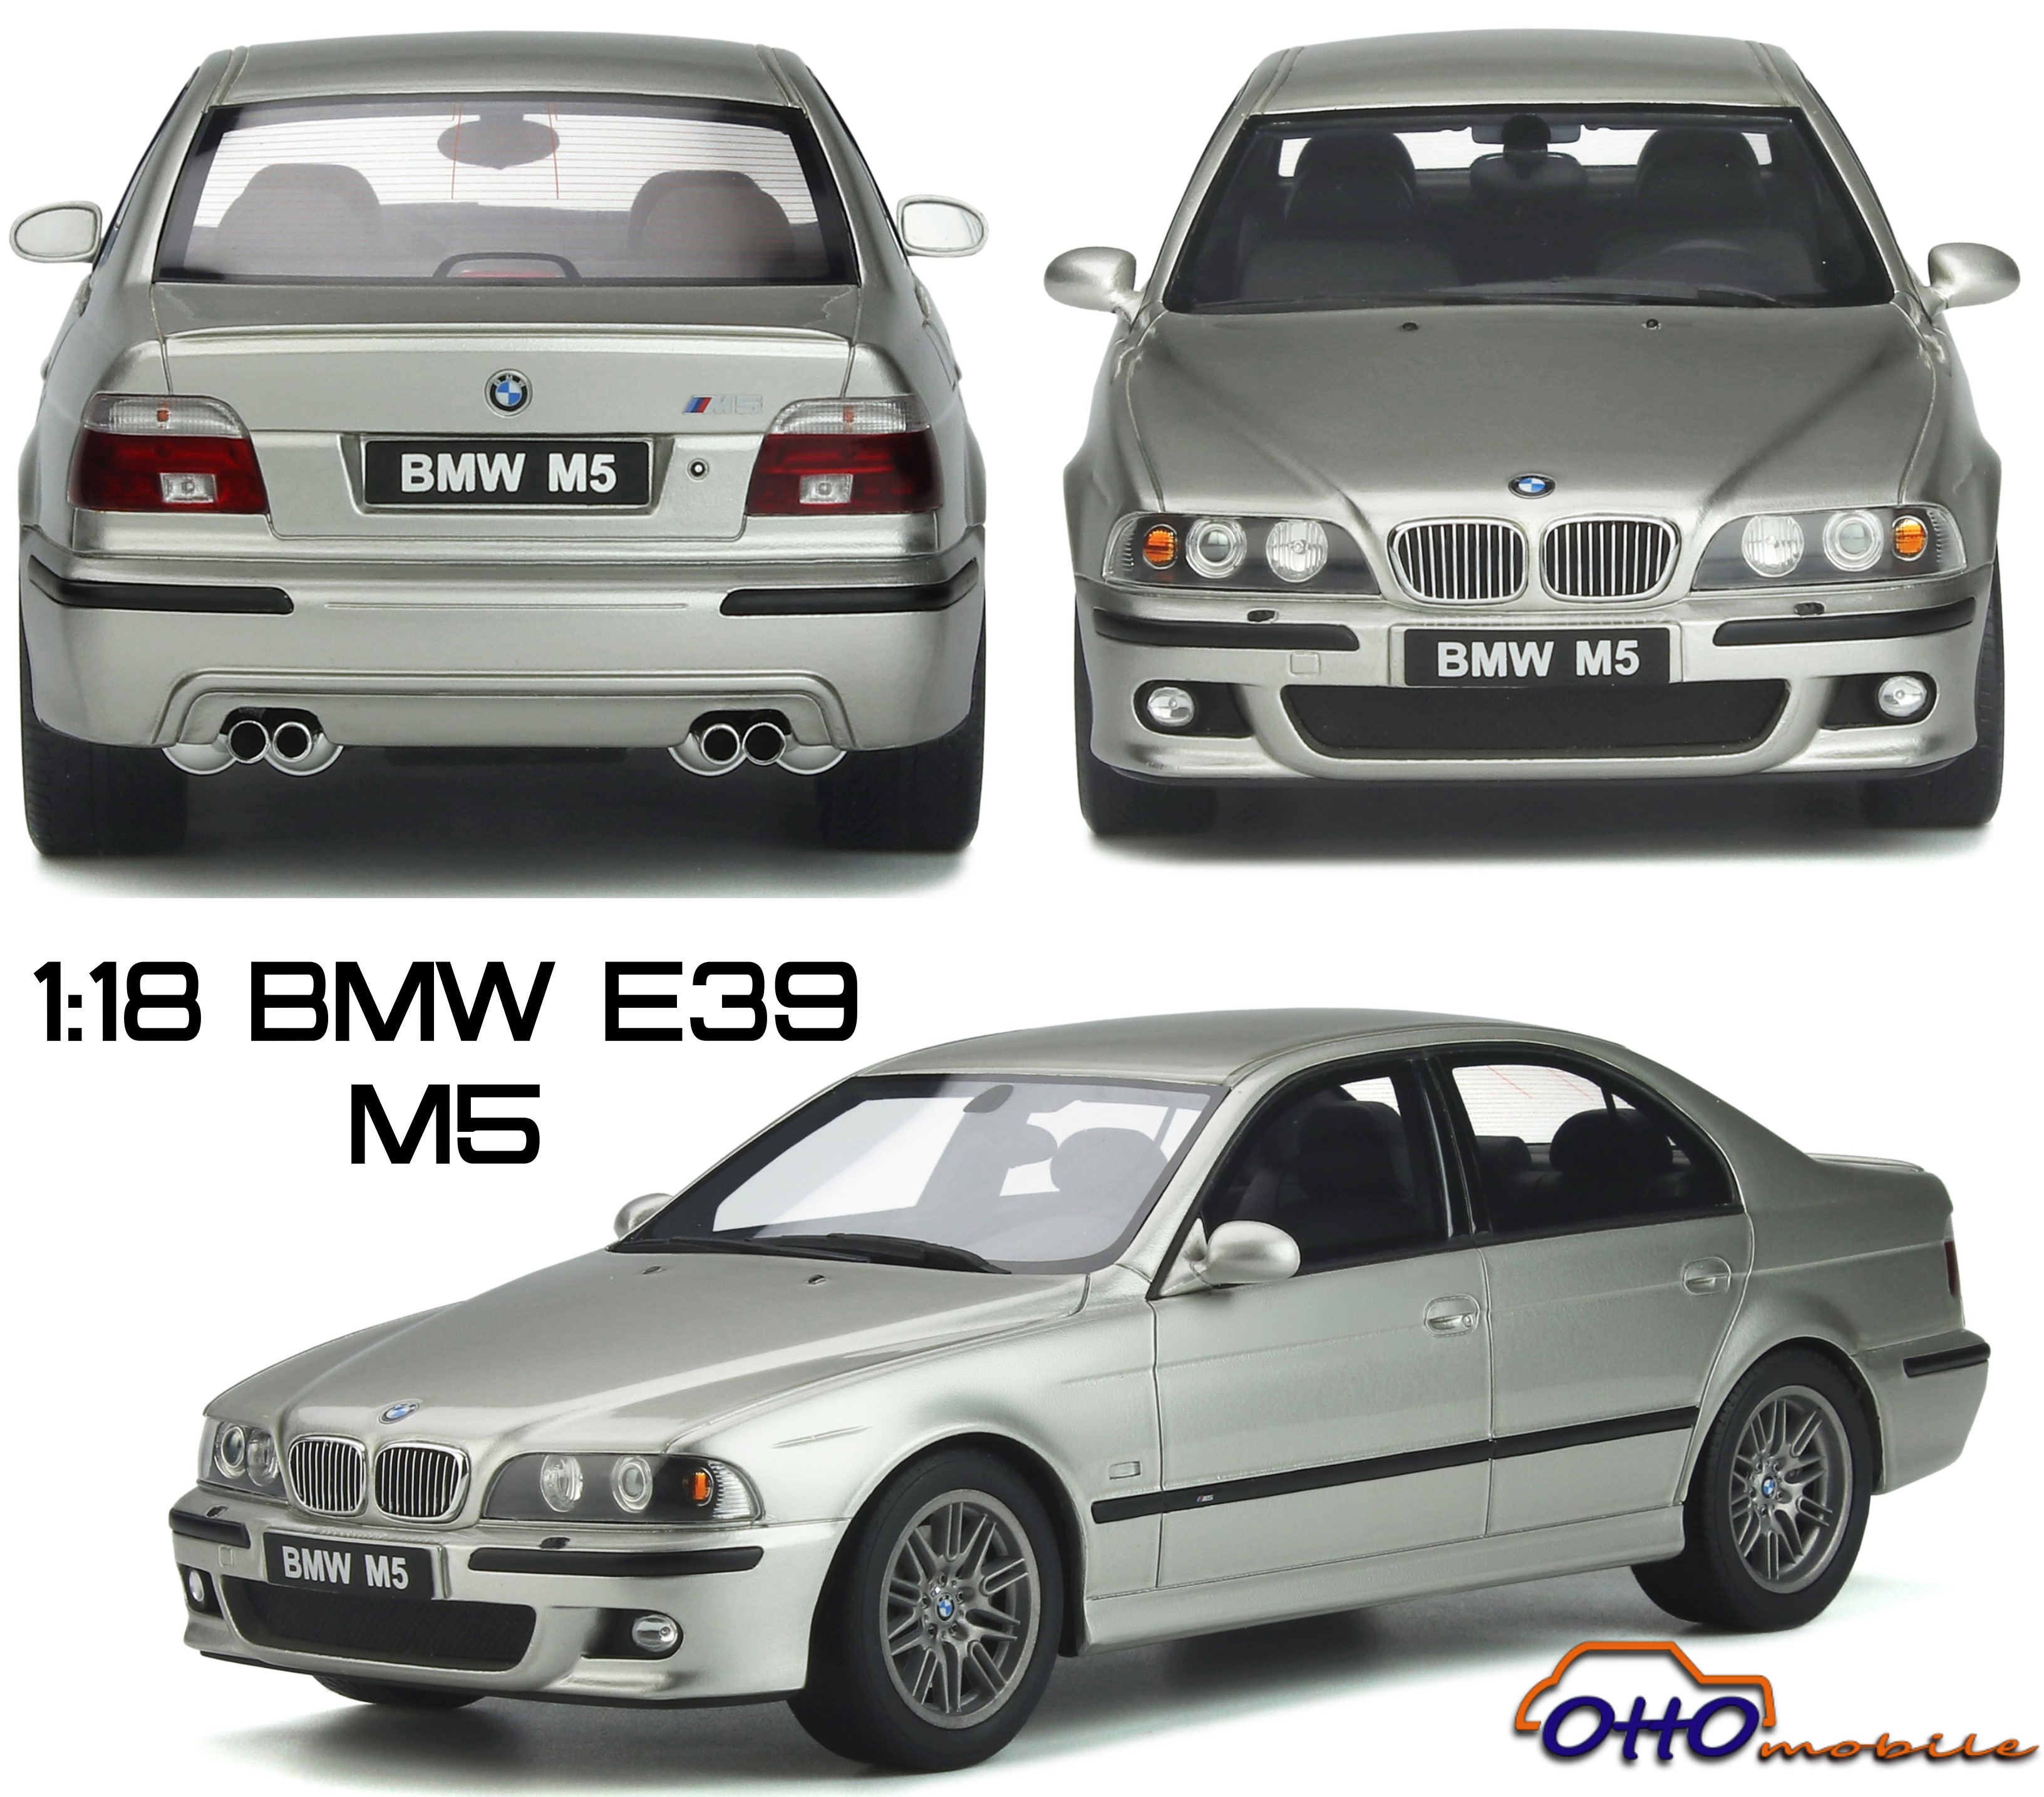 Otto BMW M5 E39 - Originale Modelle - Modelcarforum